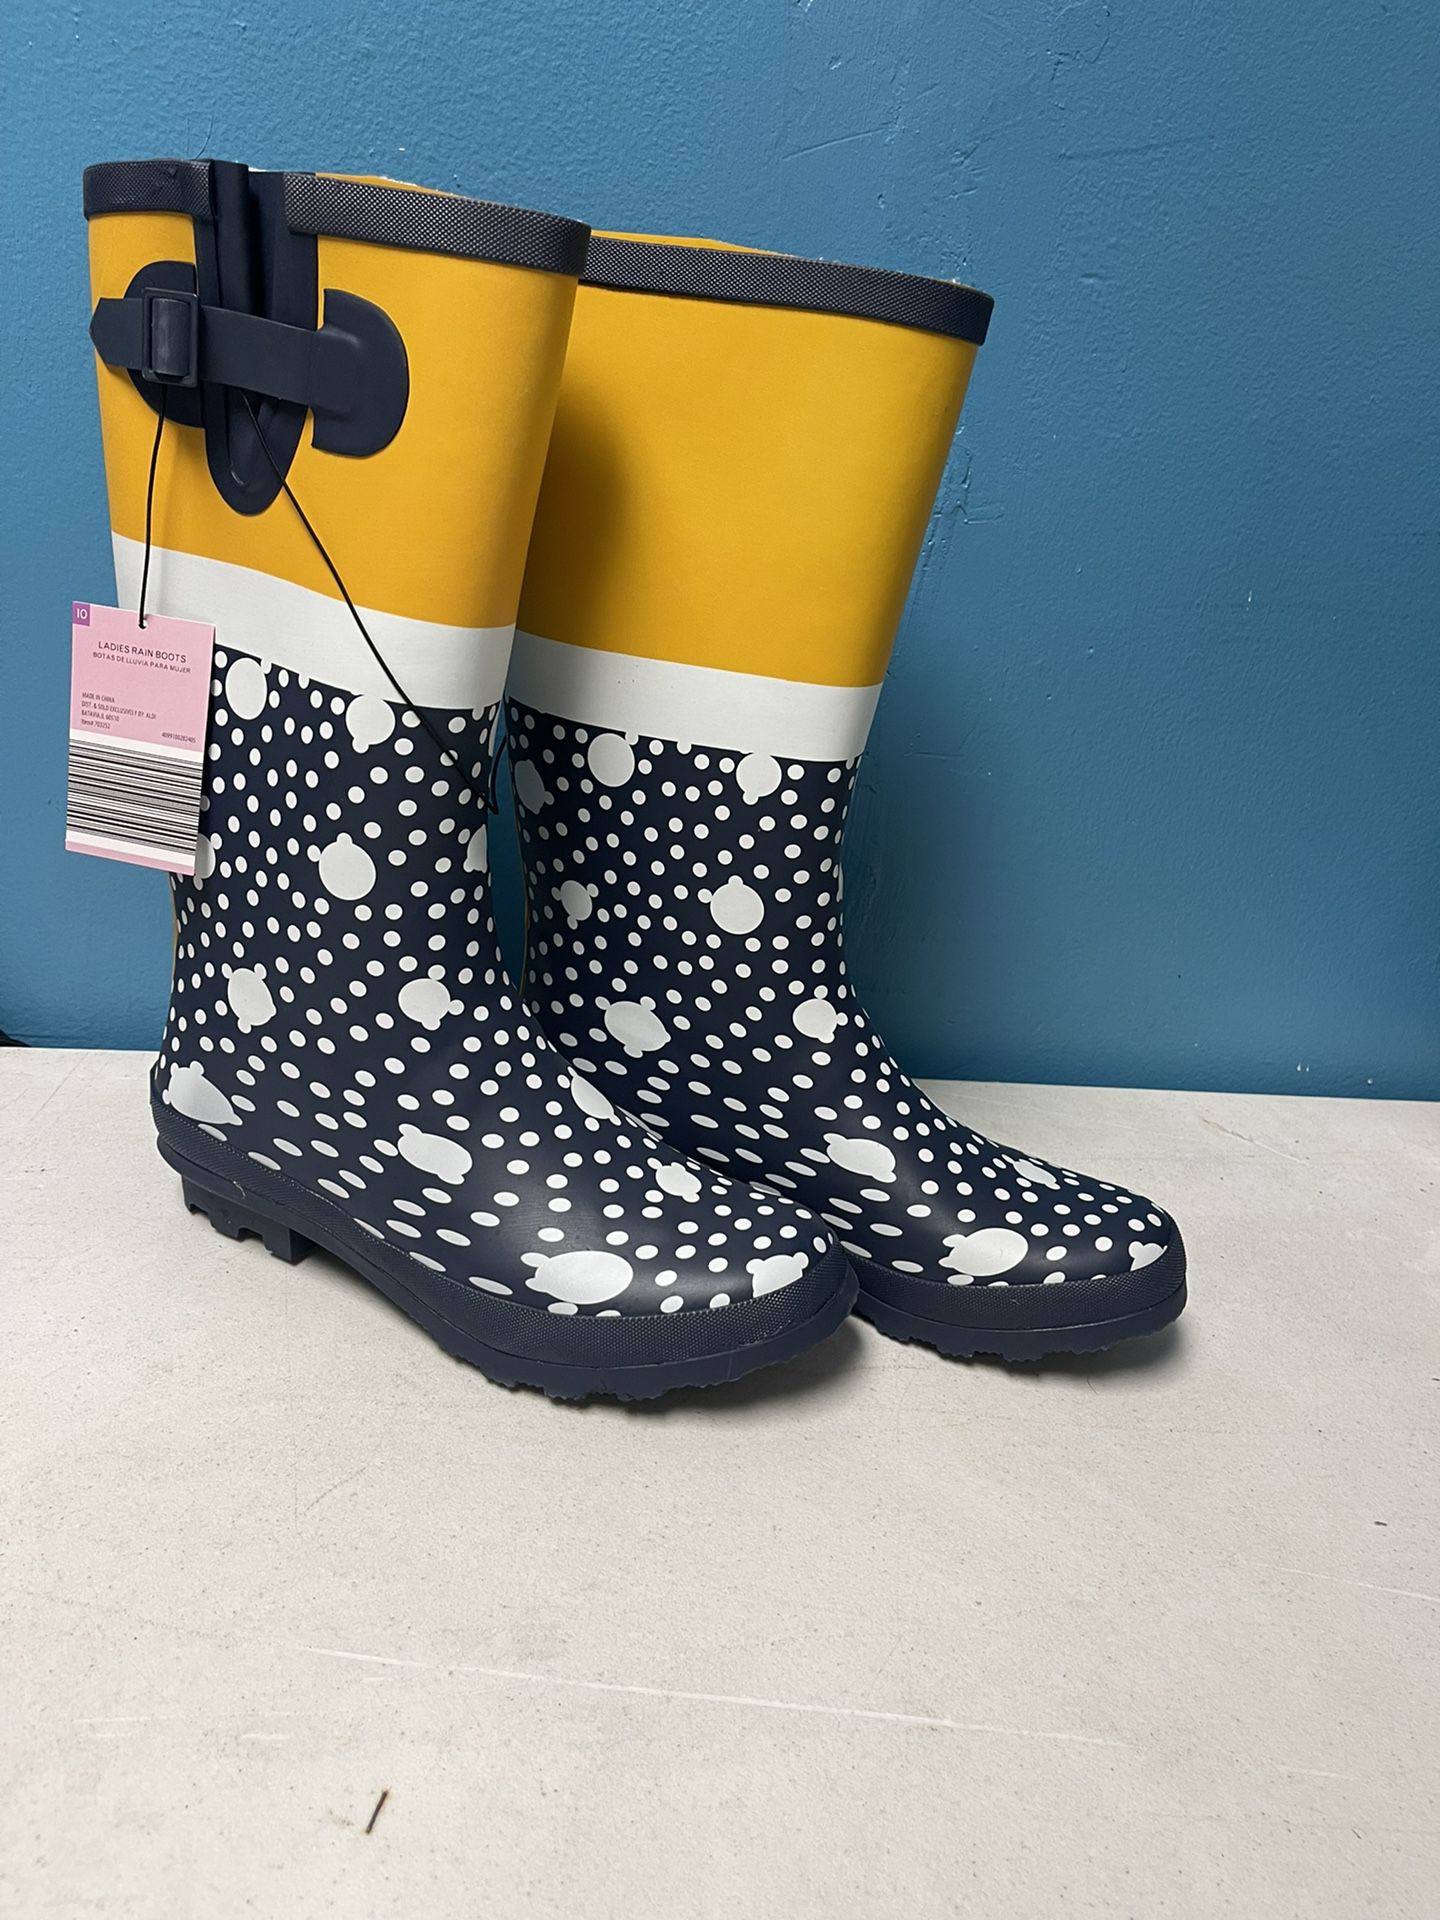 New Rain boots 